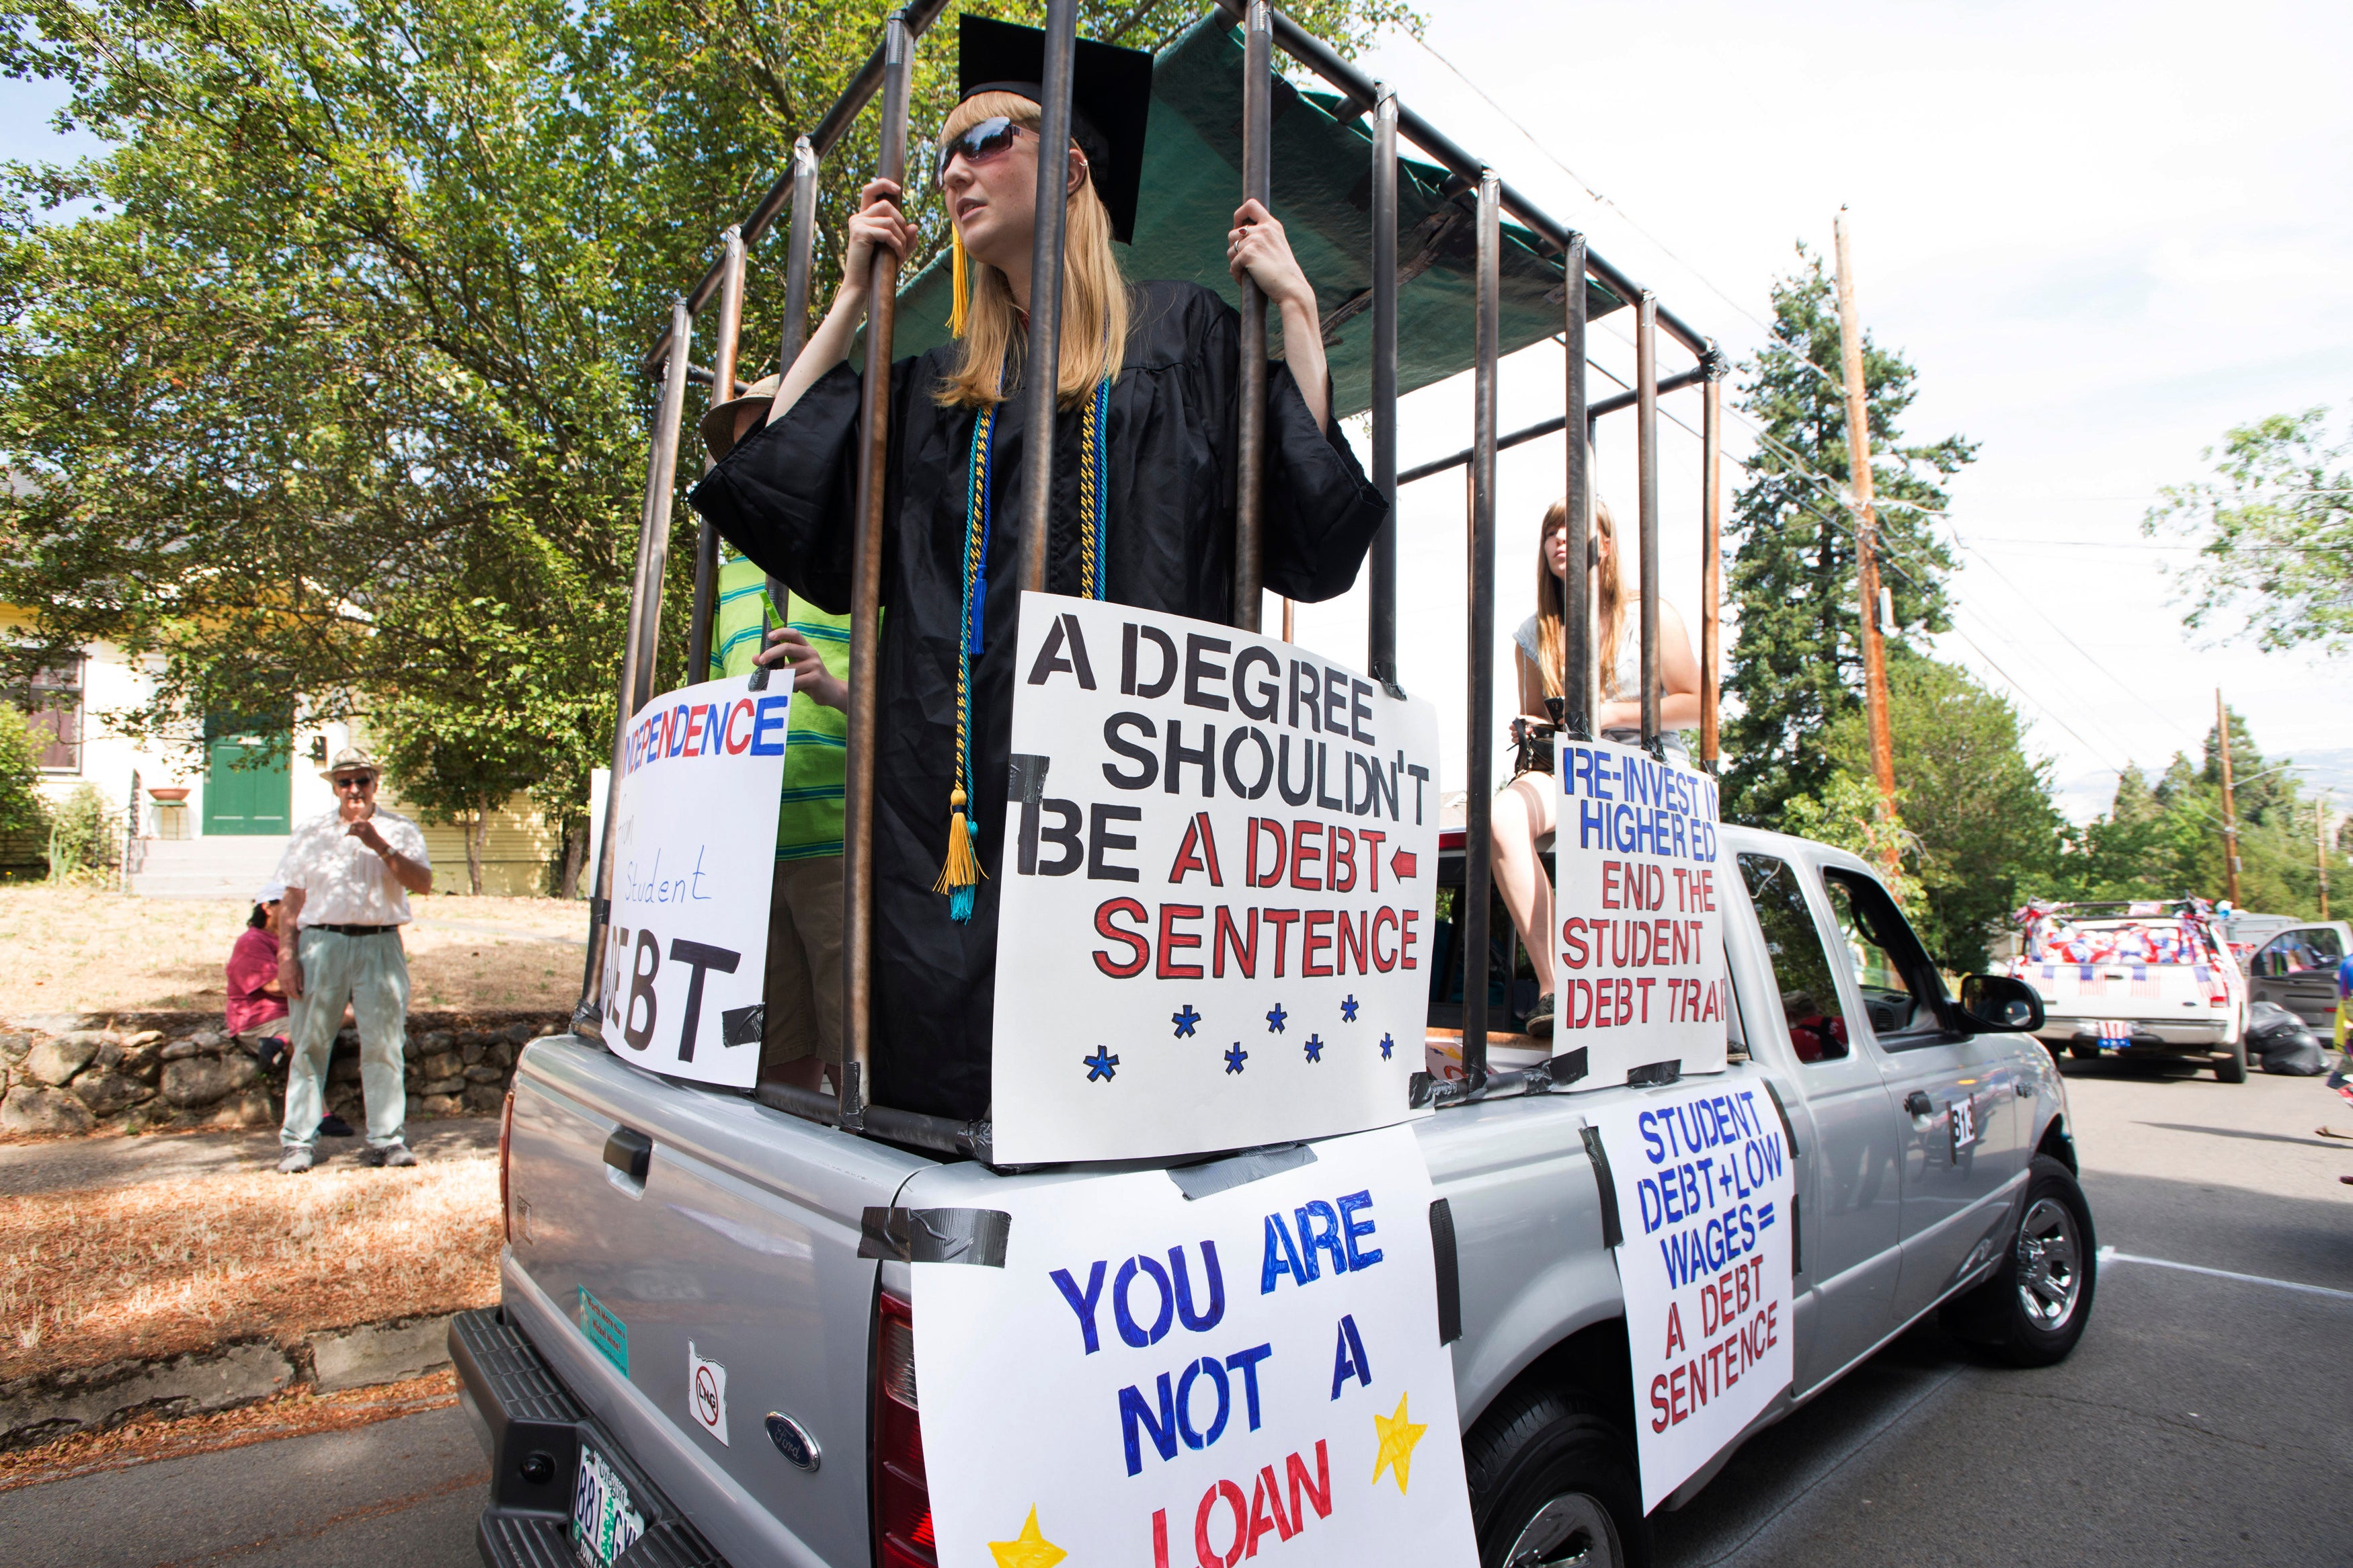 A demonstrator protests over student debt.